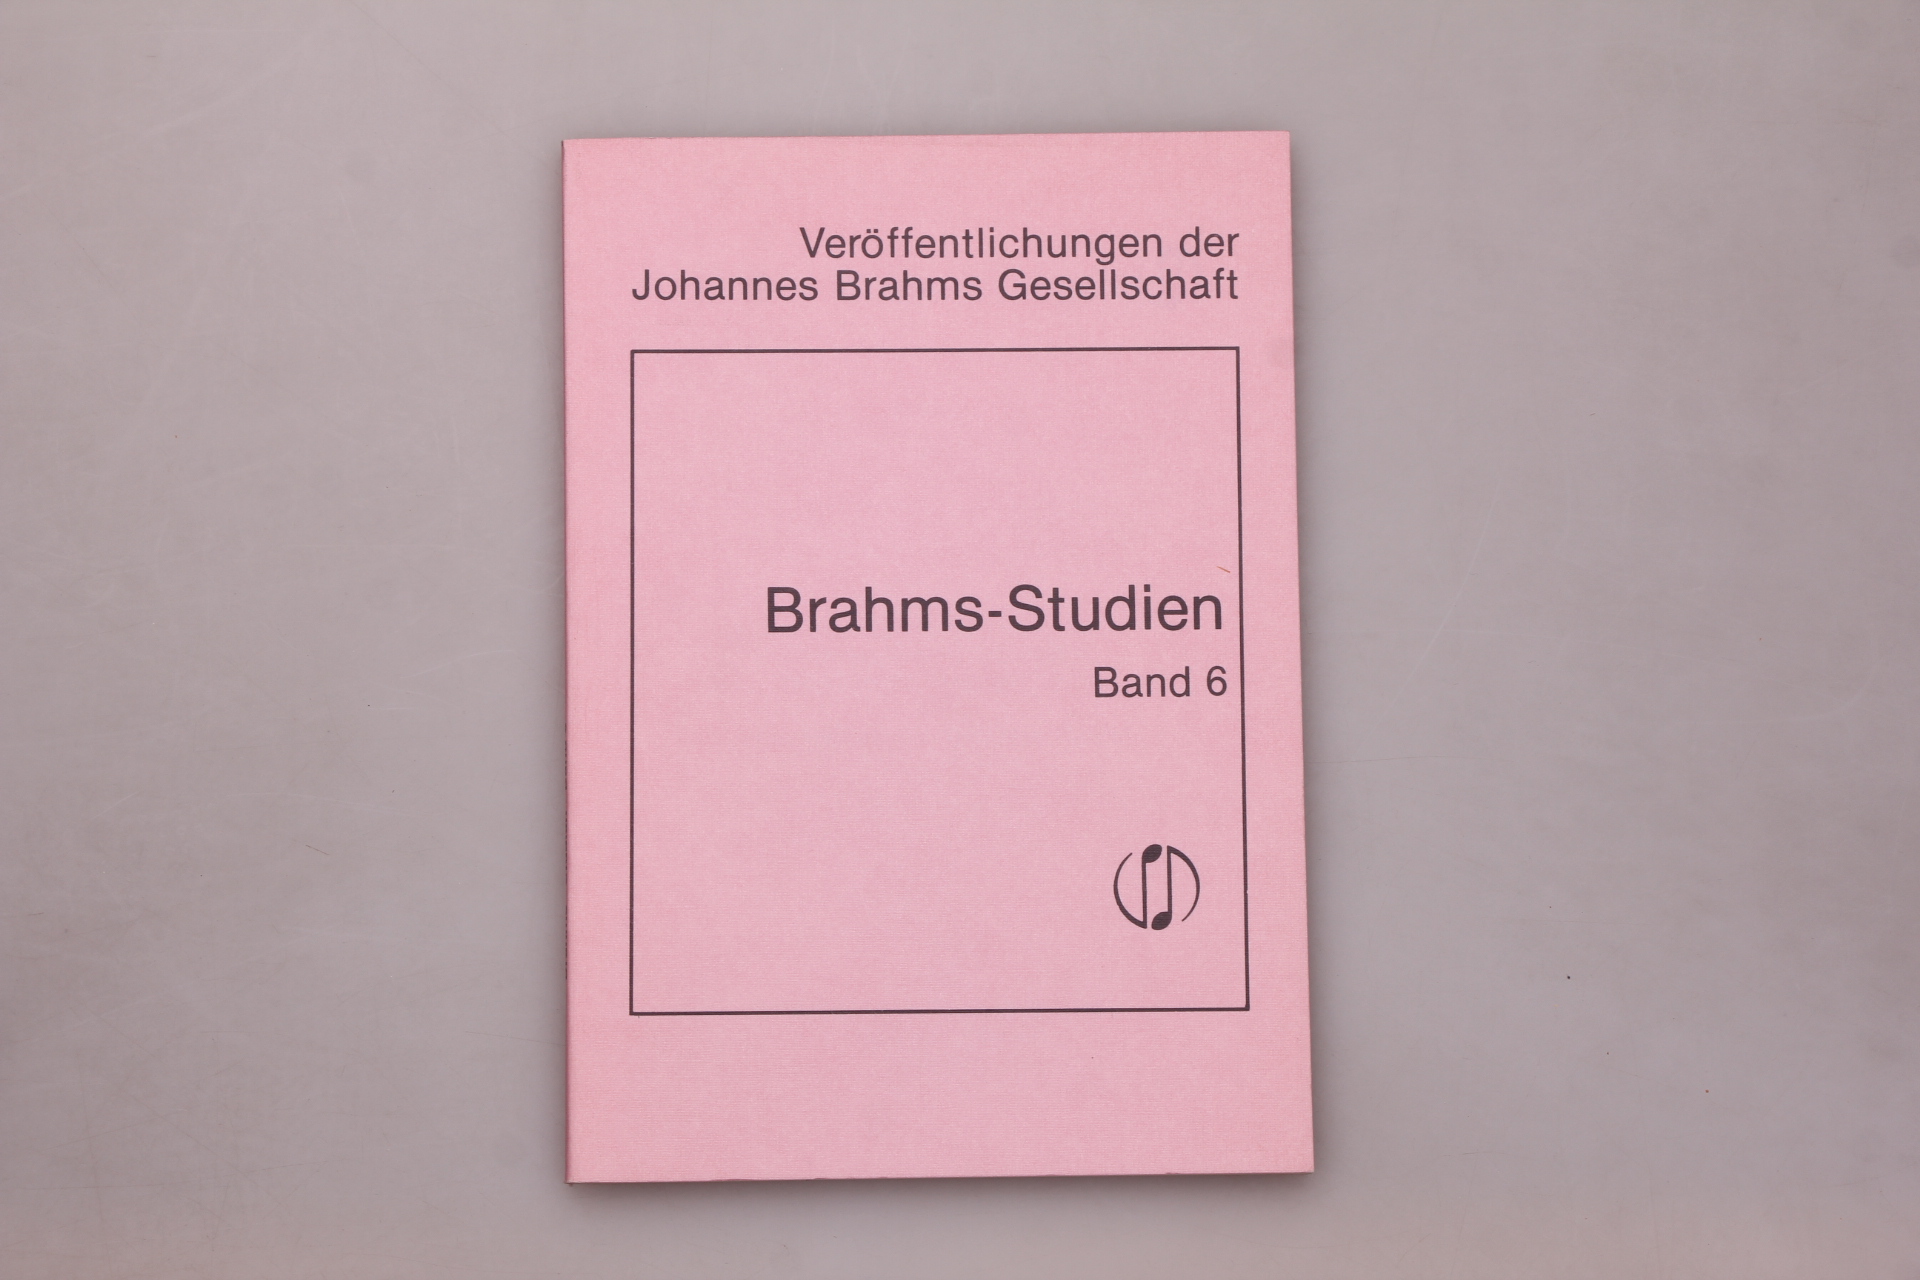 BRAHMS-STUDIEN. Veröffentlichungen der Brahms-Gesellschaft Hamburg e.V - Hrsg.]: Hofmann, Kurt; Wagner, Karl Deiter; Johannes Brahms Gesellschaft Internationale Vereinigung e.V.